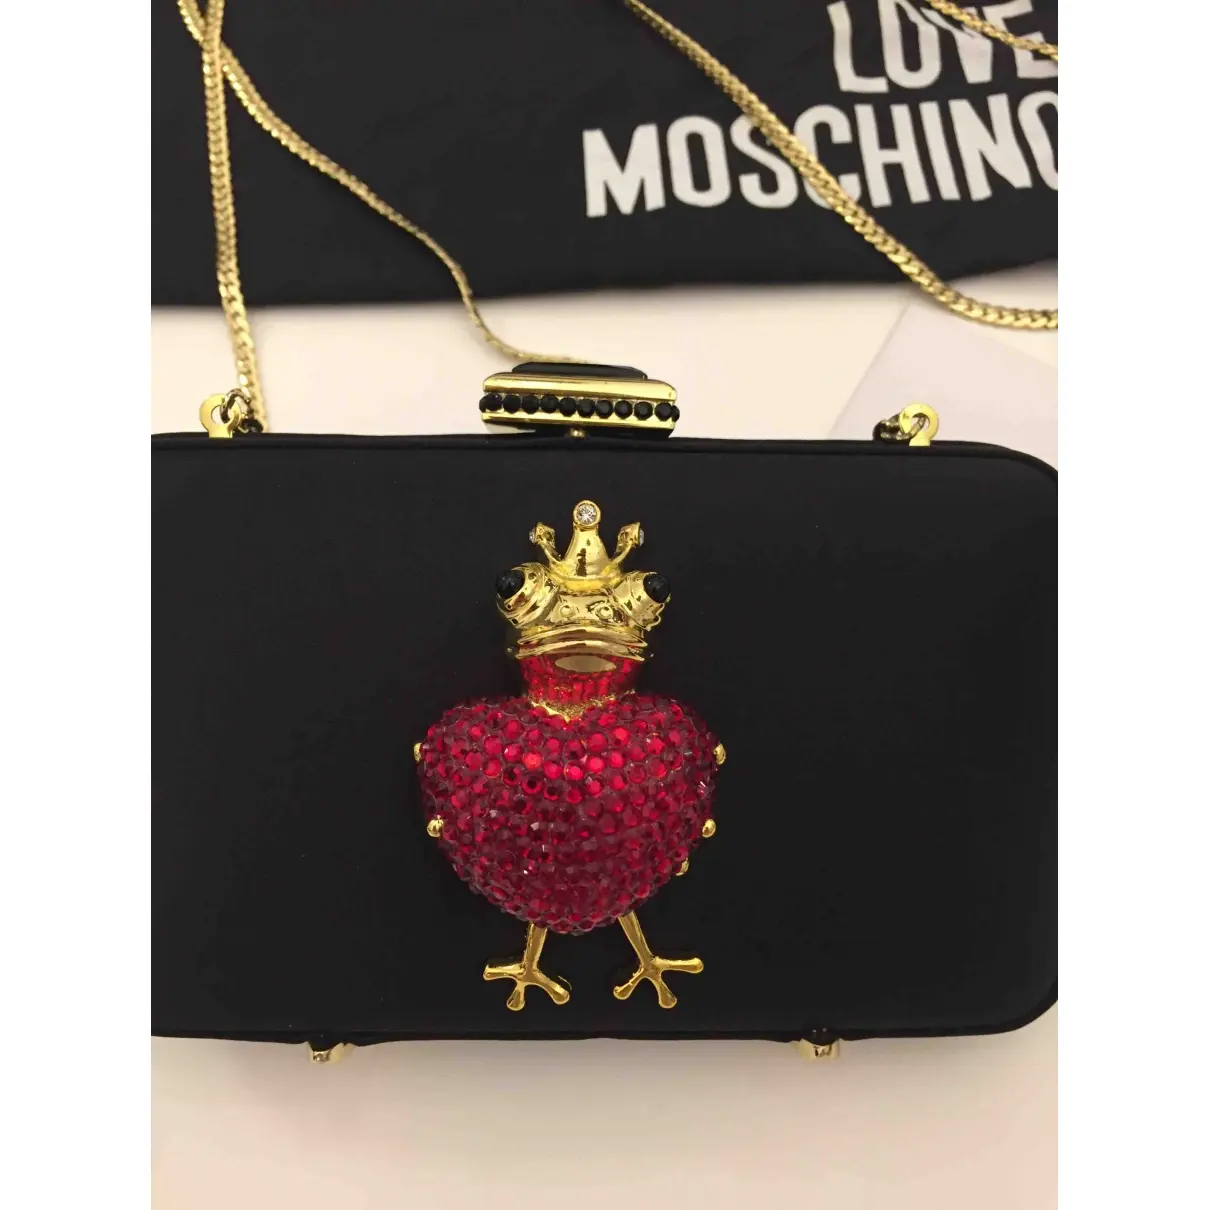 Moschino Love Silk clutch bag for sale